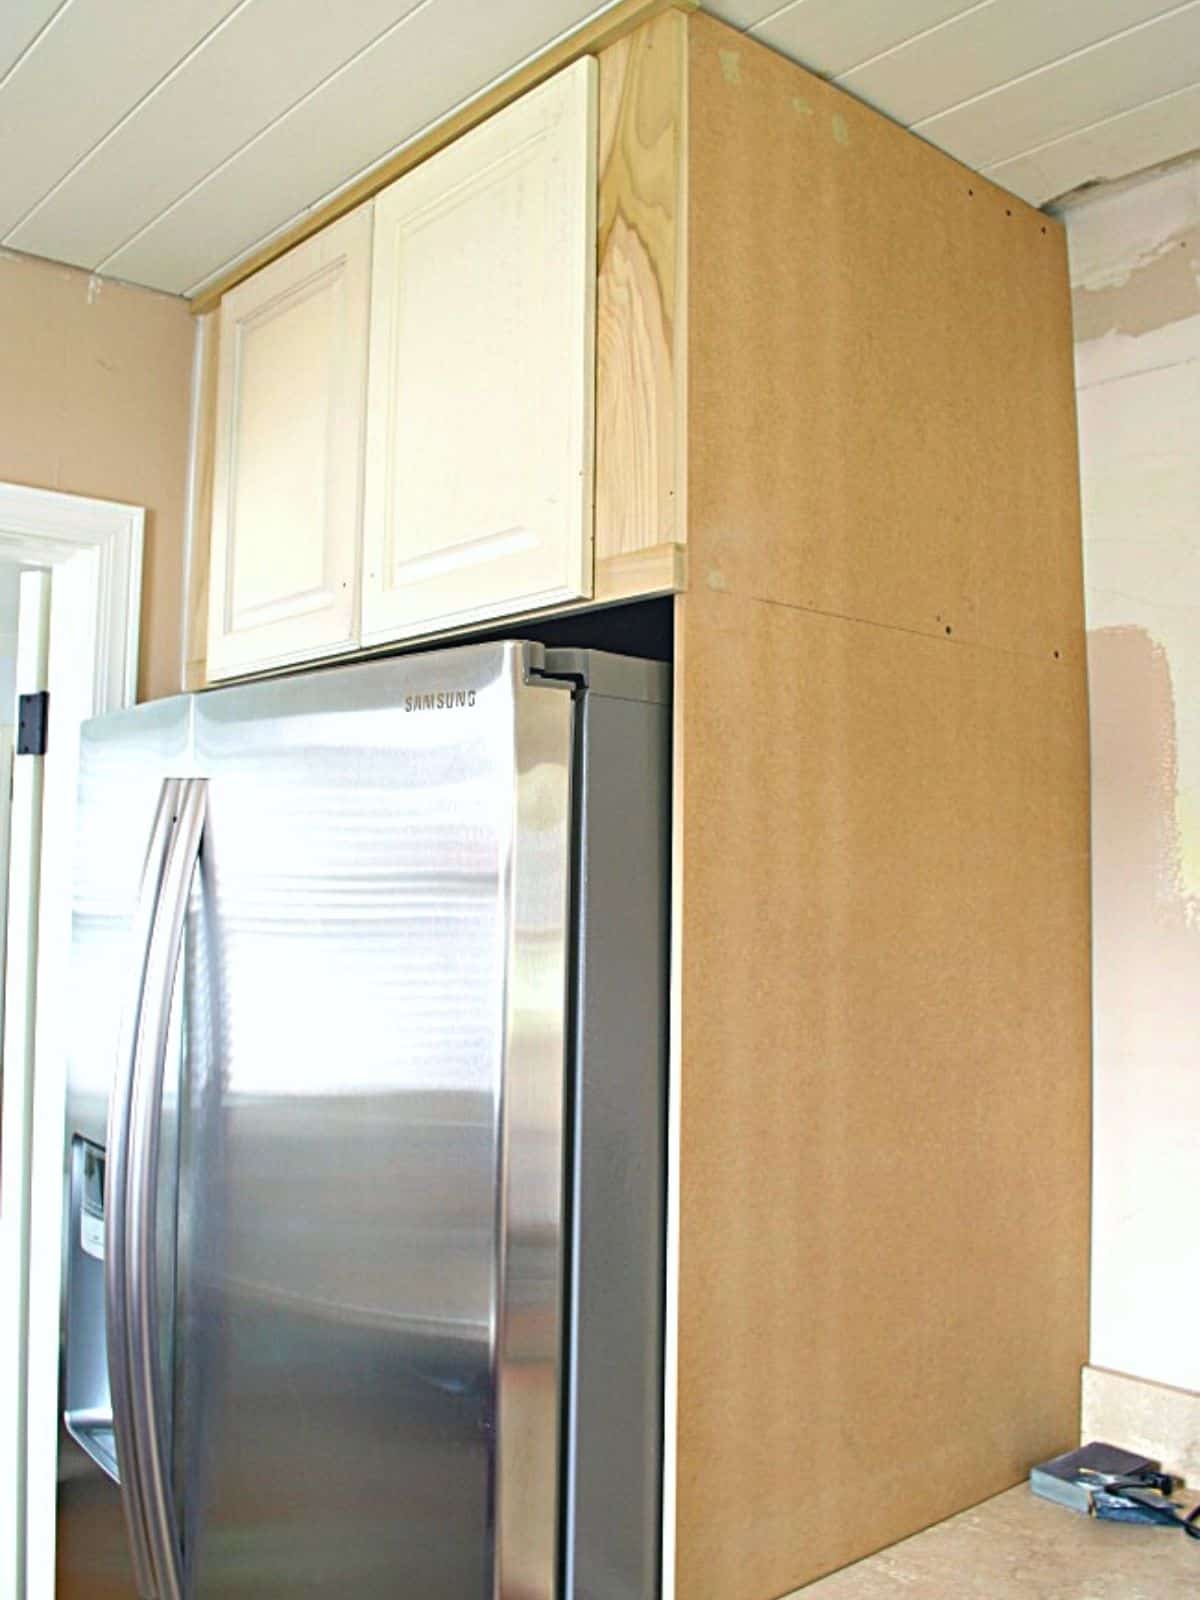 unpainted refrigerator cabinet with doors